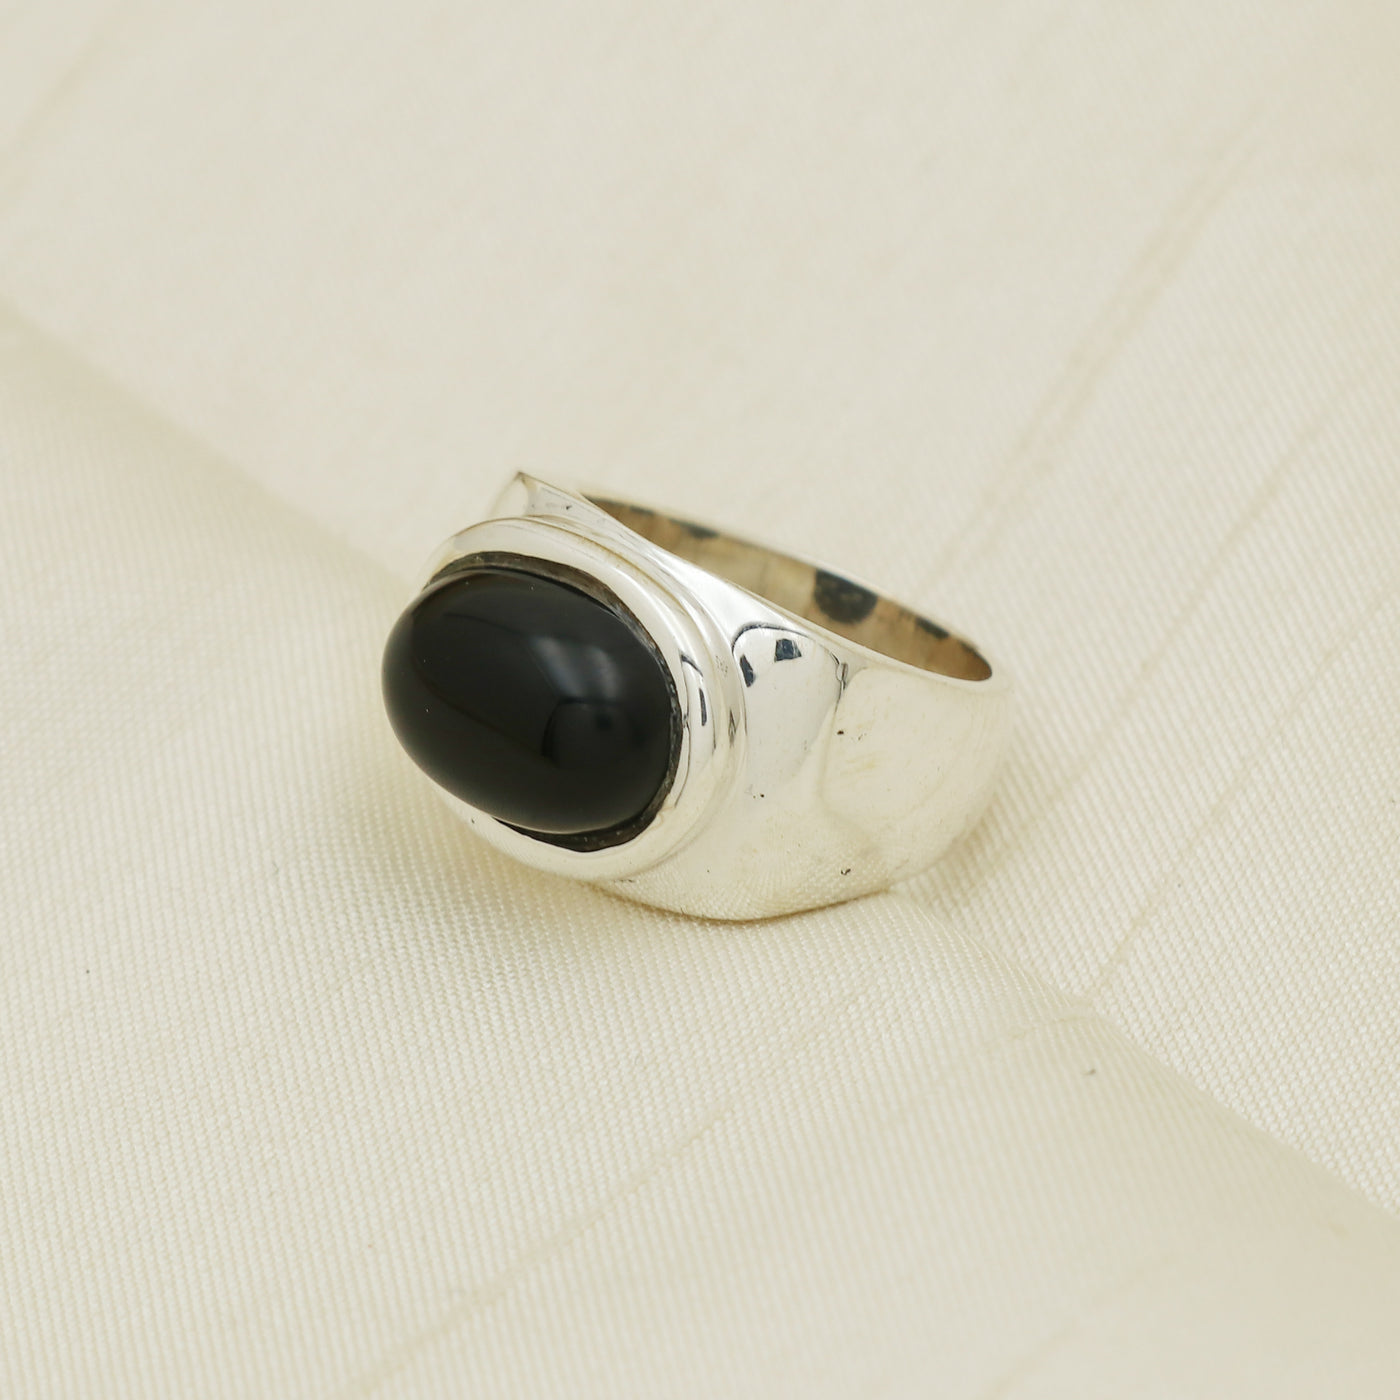 Gentle Black Onyx Ring